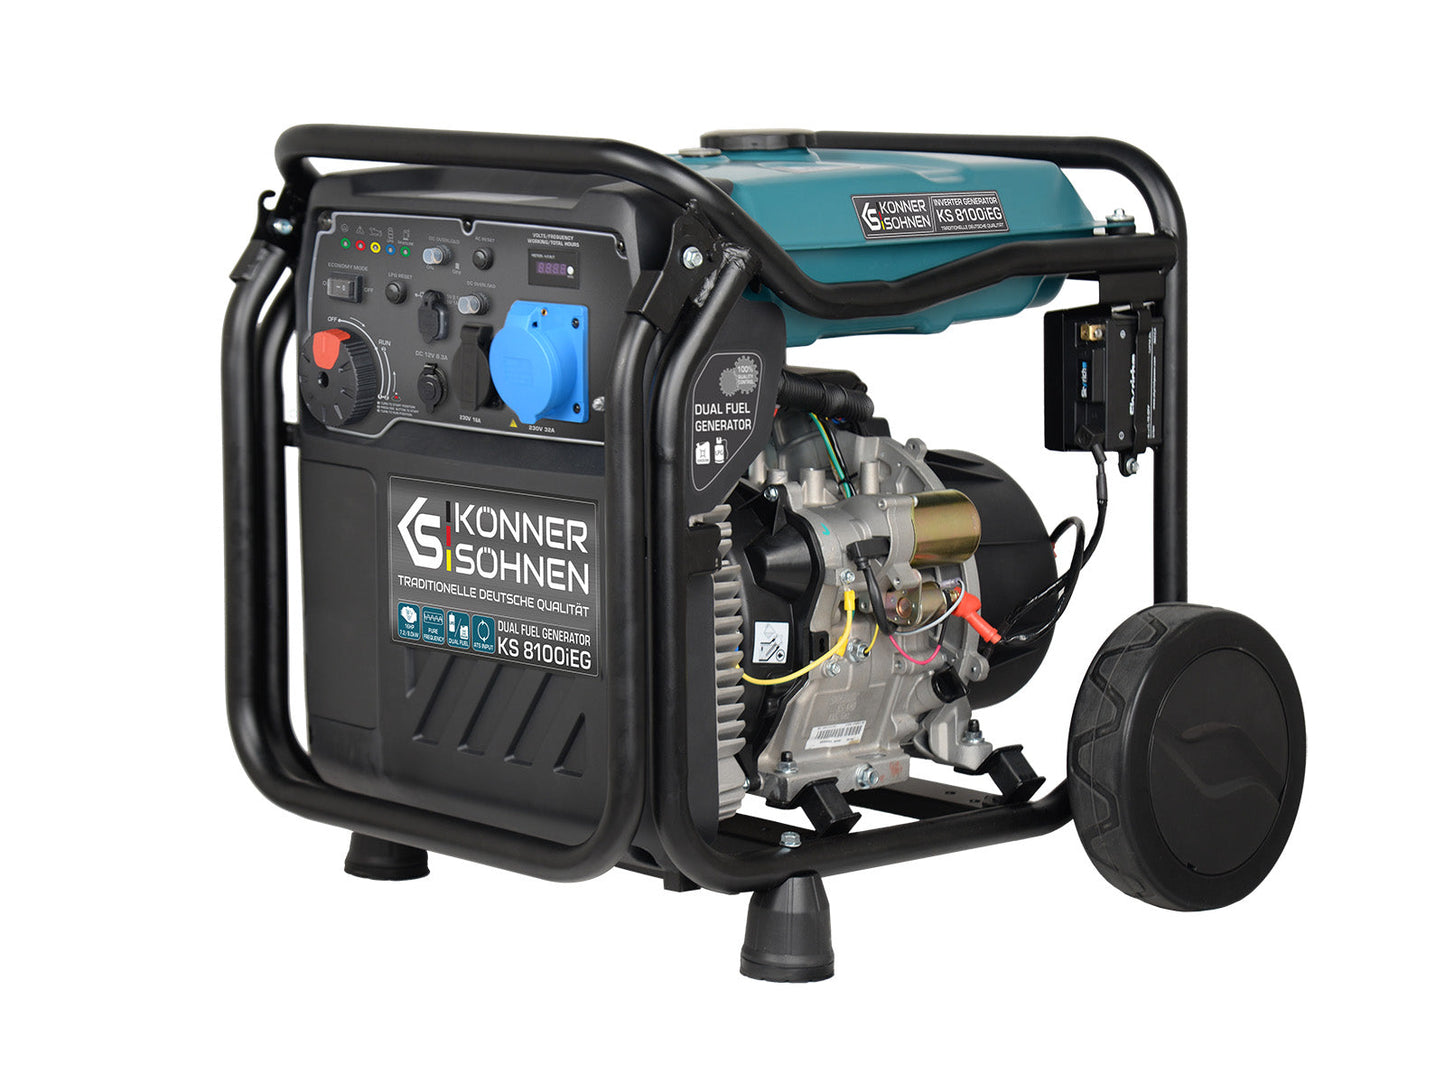 Inverter-Generator KS 8100iE G Benzin/Gas LPG